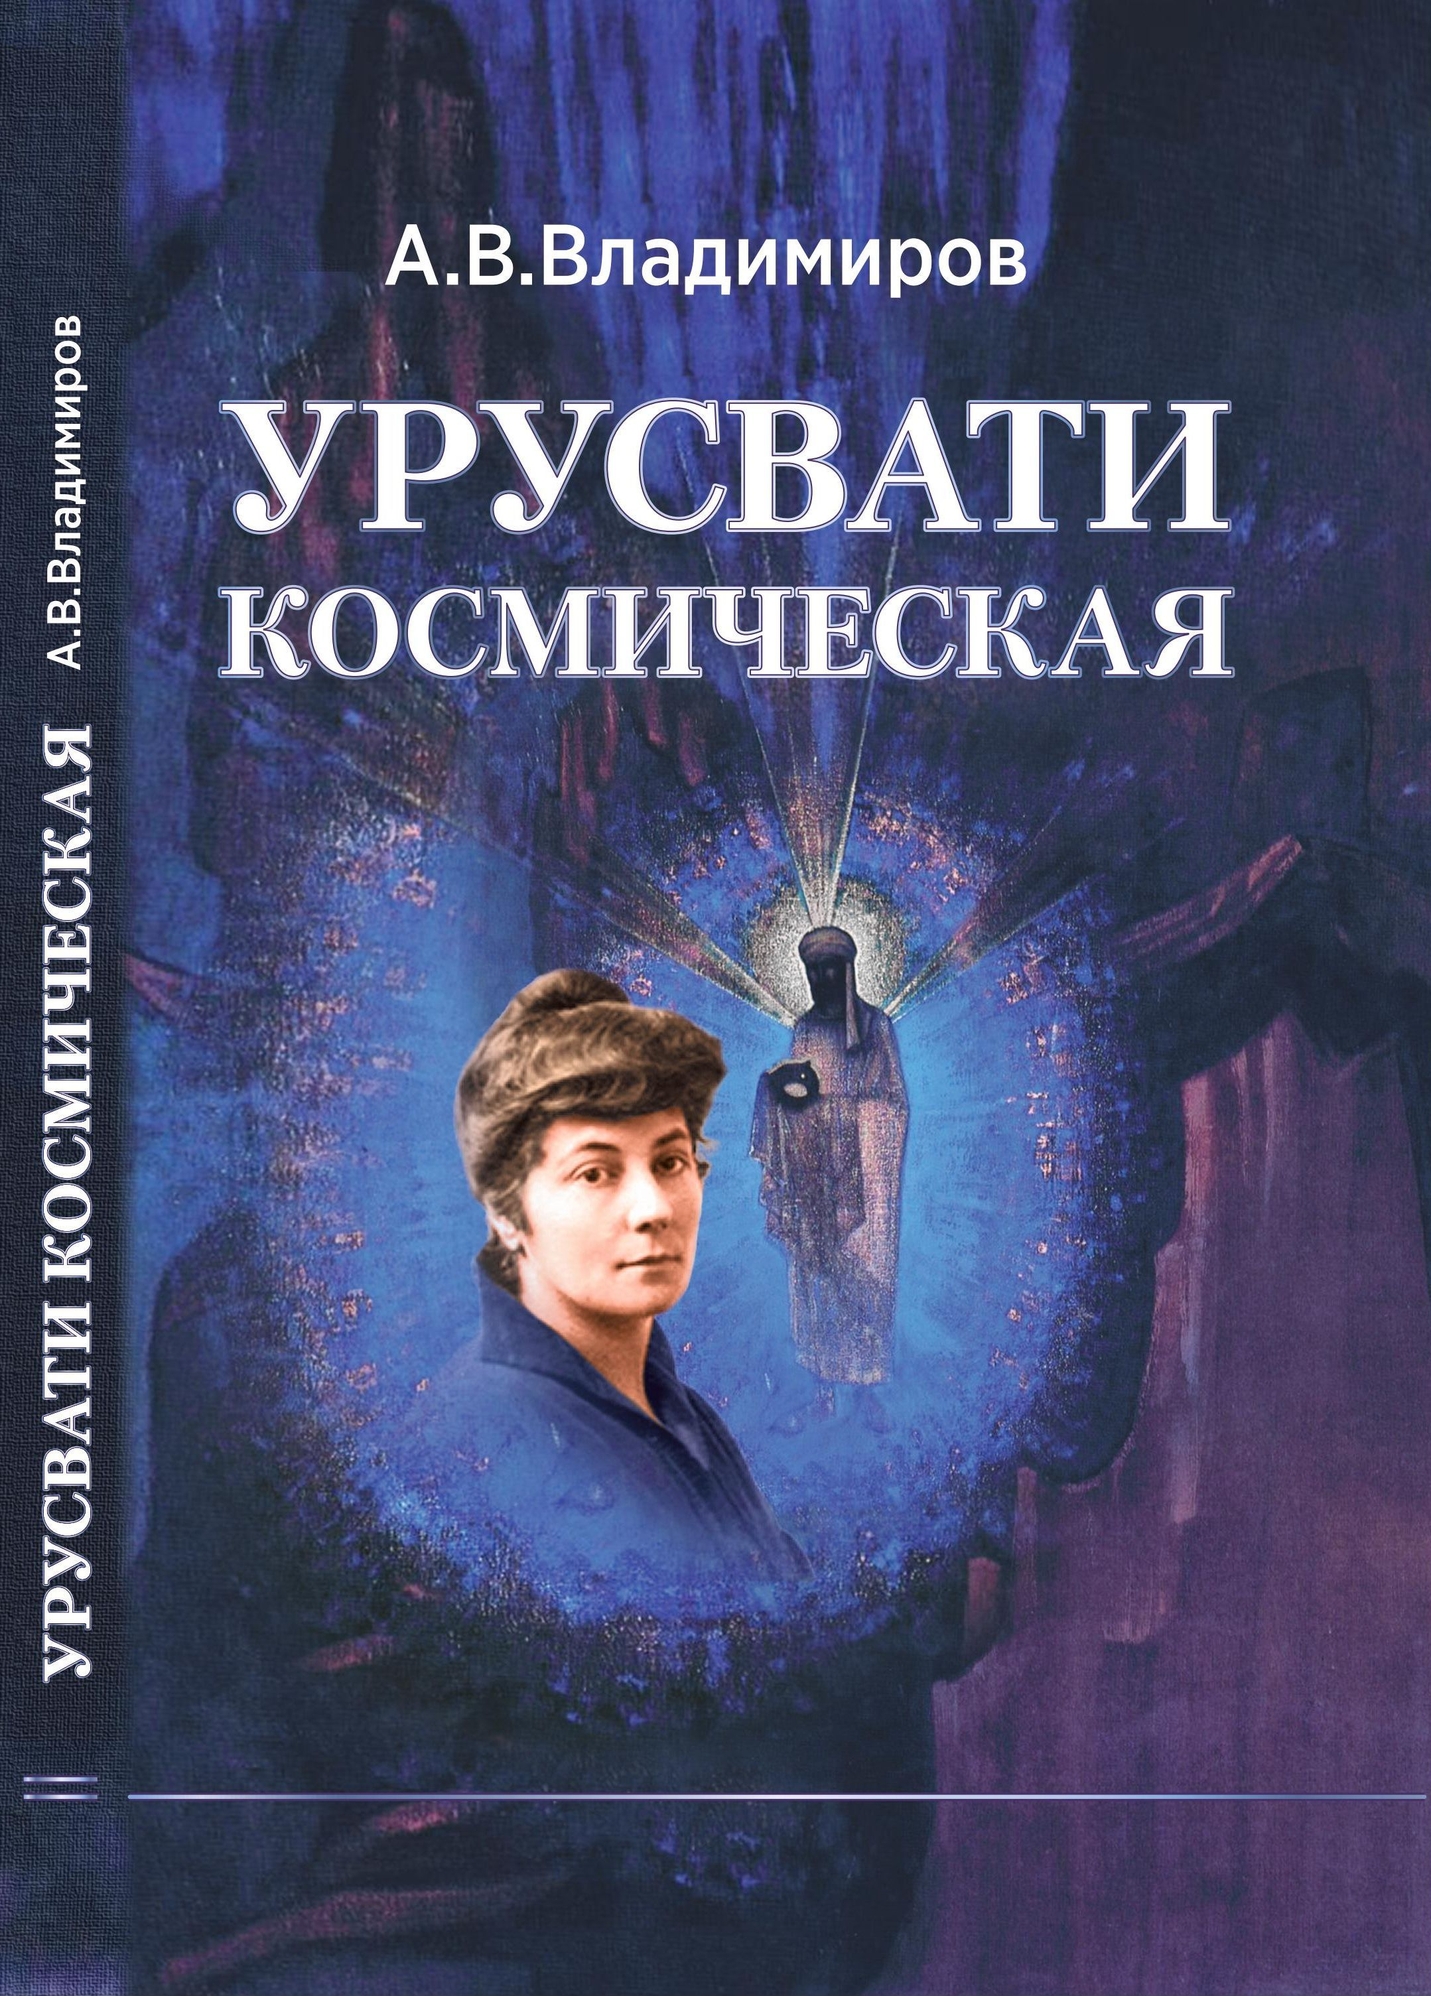 Книга:  А.В.Владимирова 